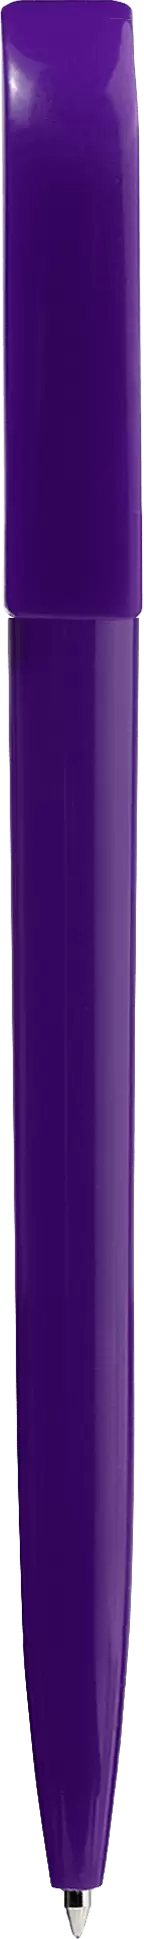 Ручка GLOBAL Фиолетовая 1080.11